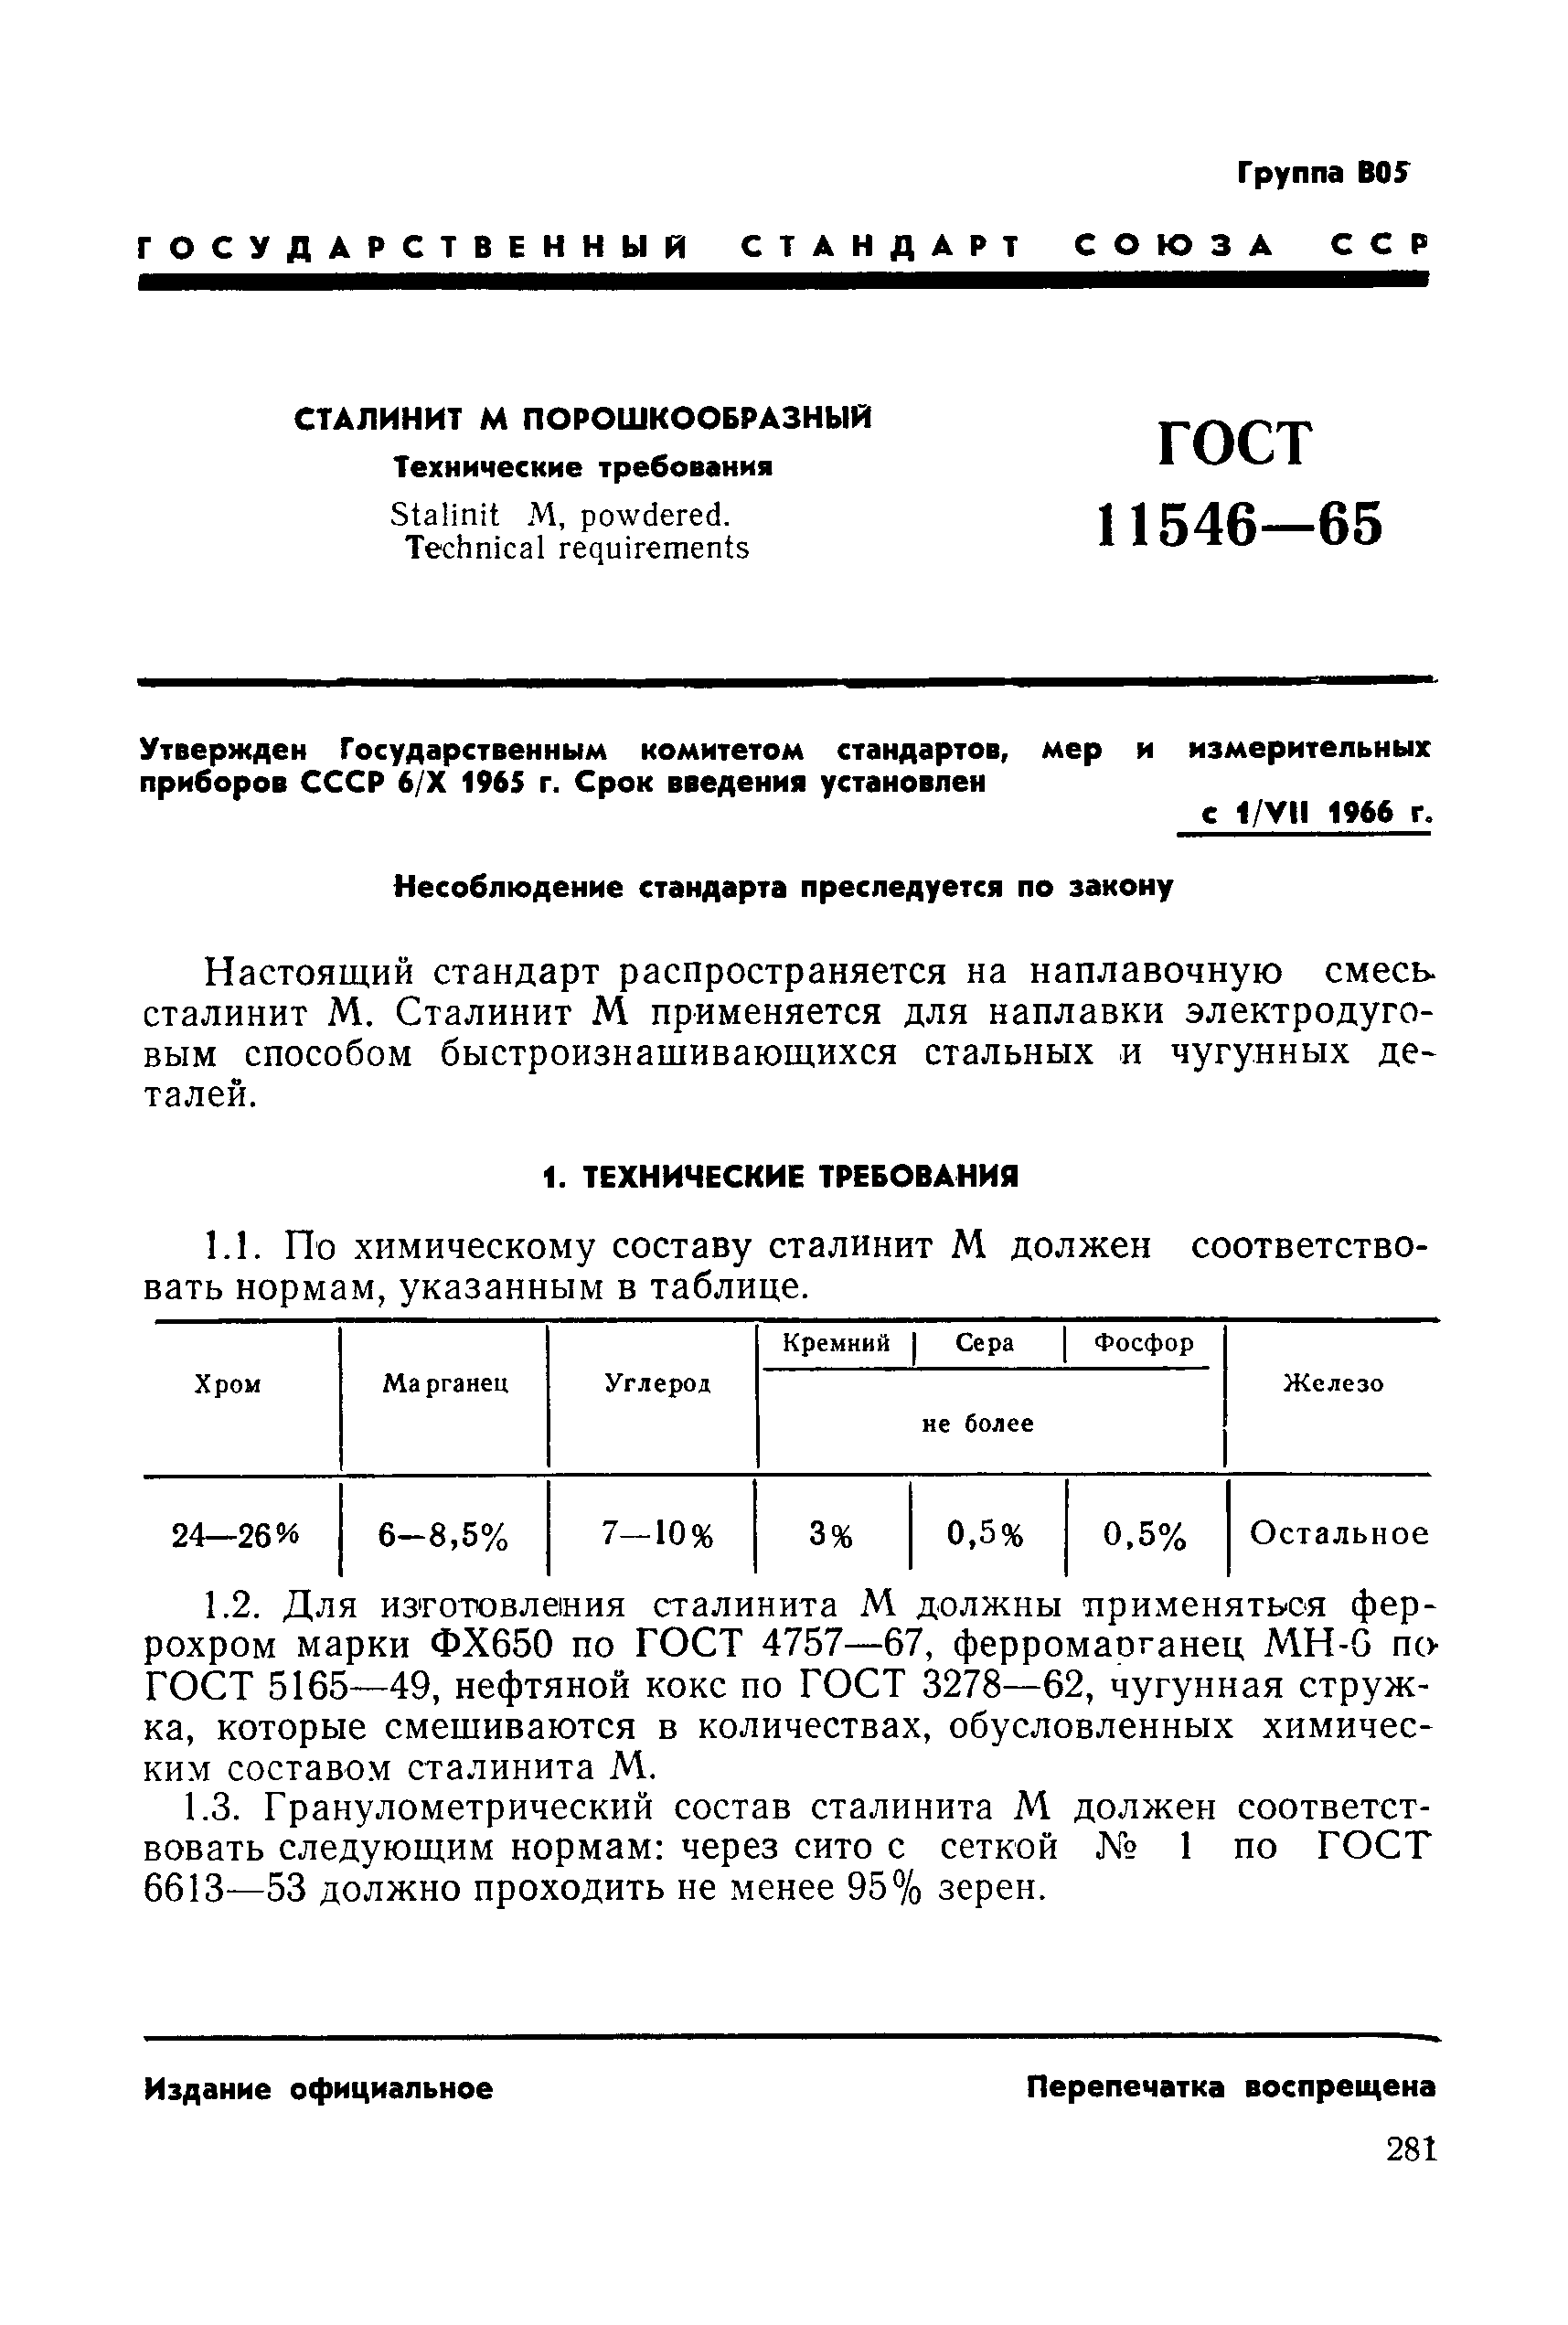 ГОСТ 11546-65